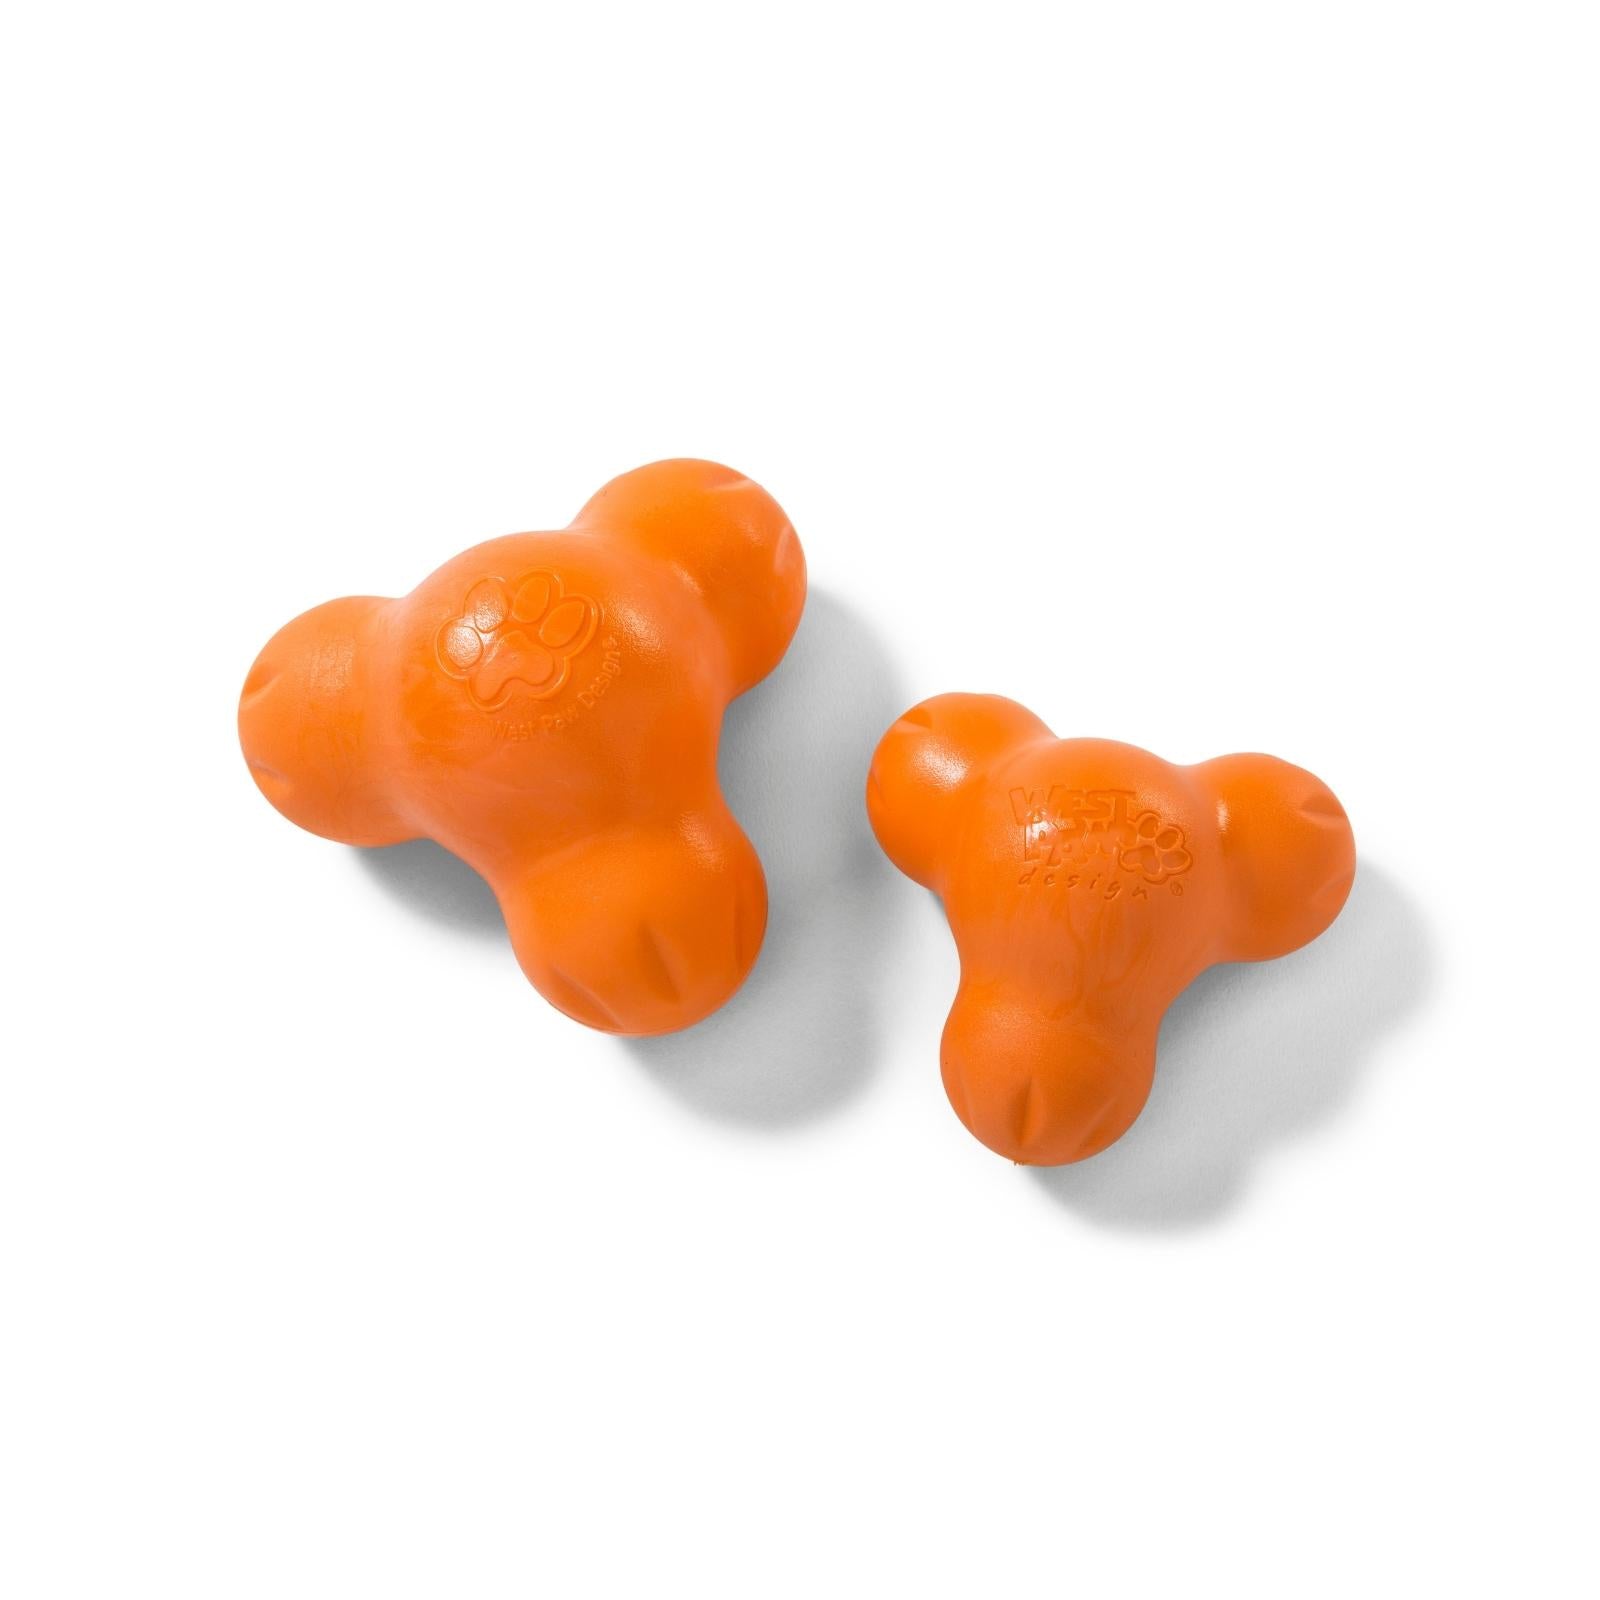 TUX de West Paw® color Naranja - Juguete Dispensador de Premios para Perros